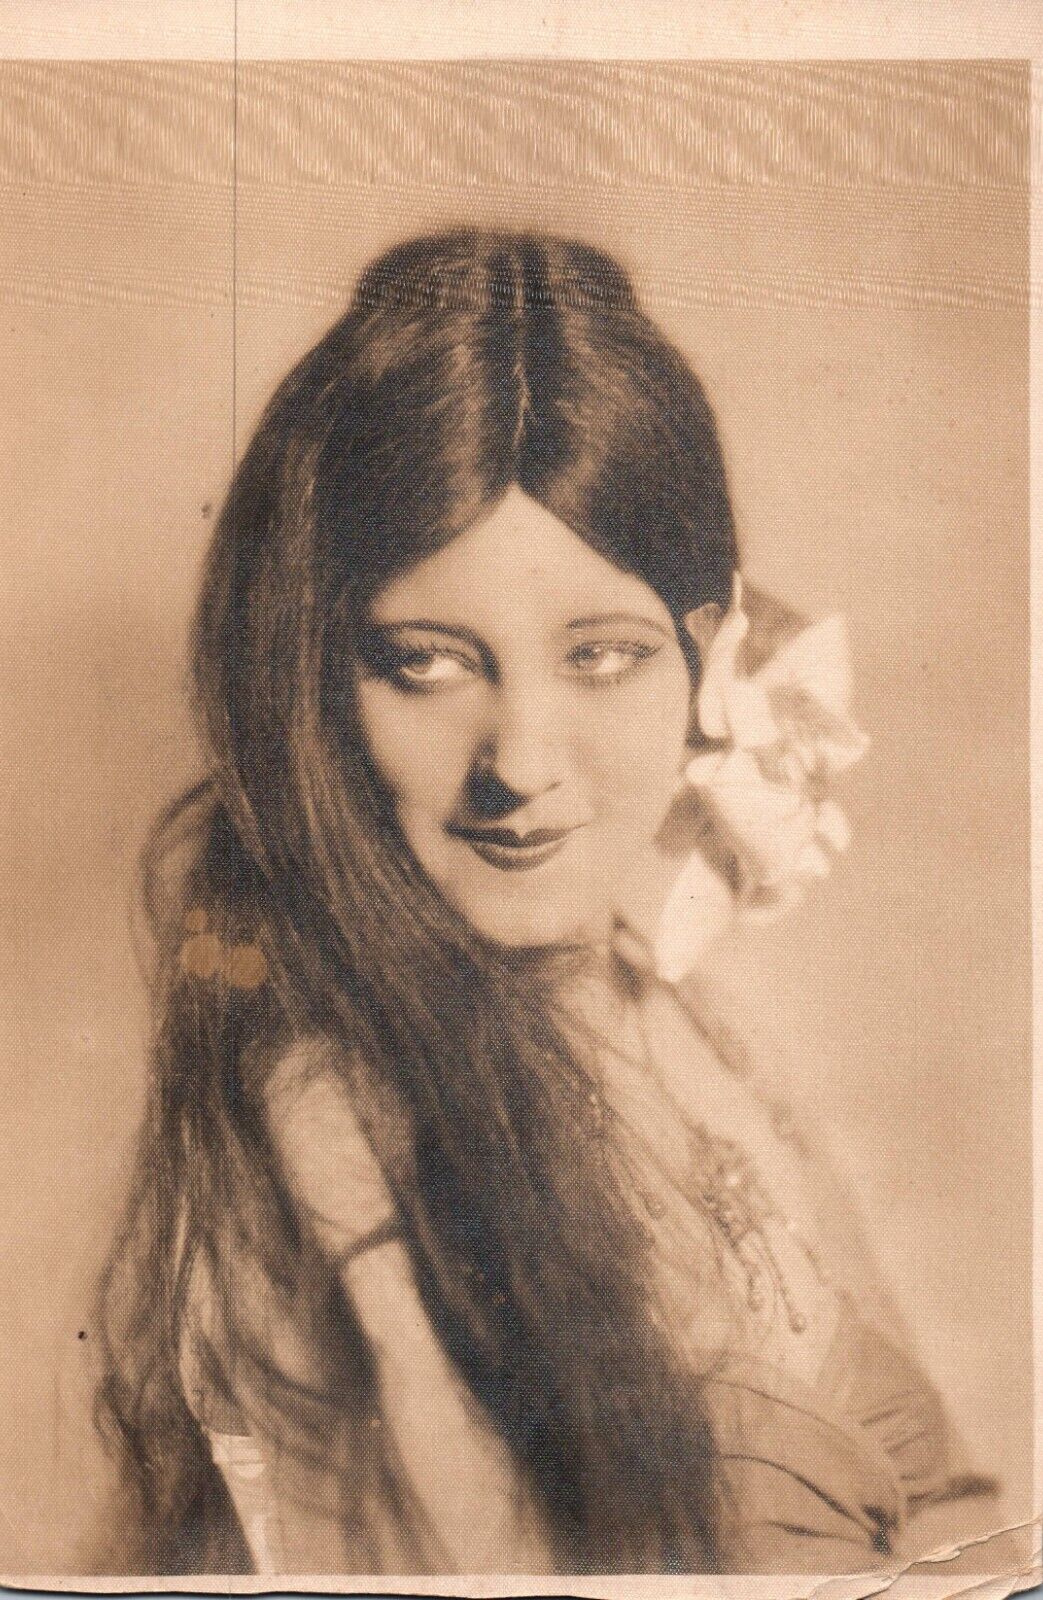 HOLLYWOOD BEAUTY SALLY RAND BURLESQUE JAZZ ERA STUNNING PORTRAIT 1920s Photo N